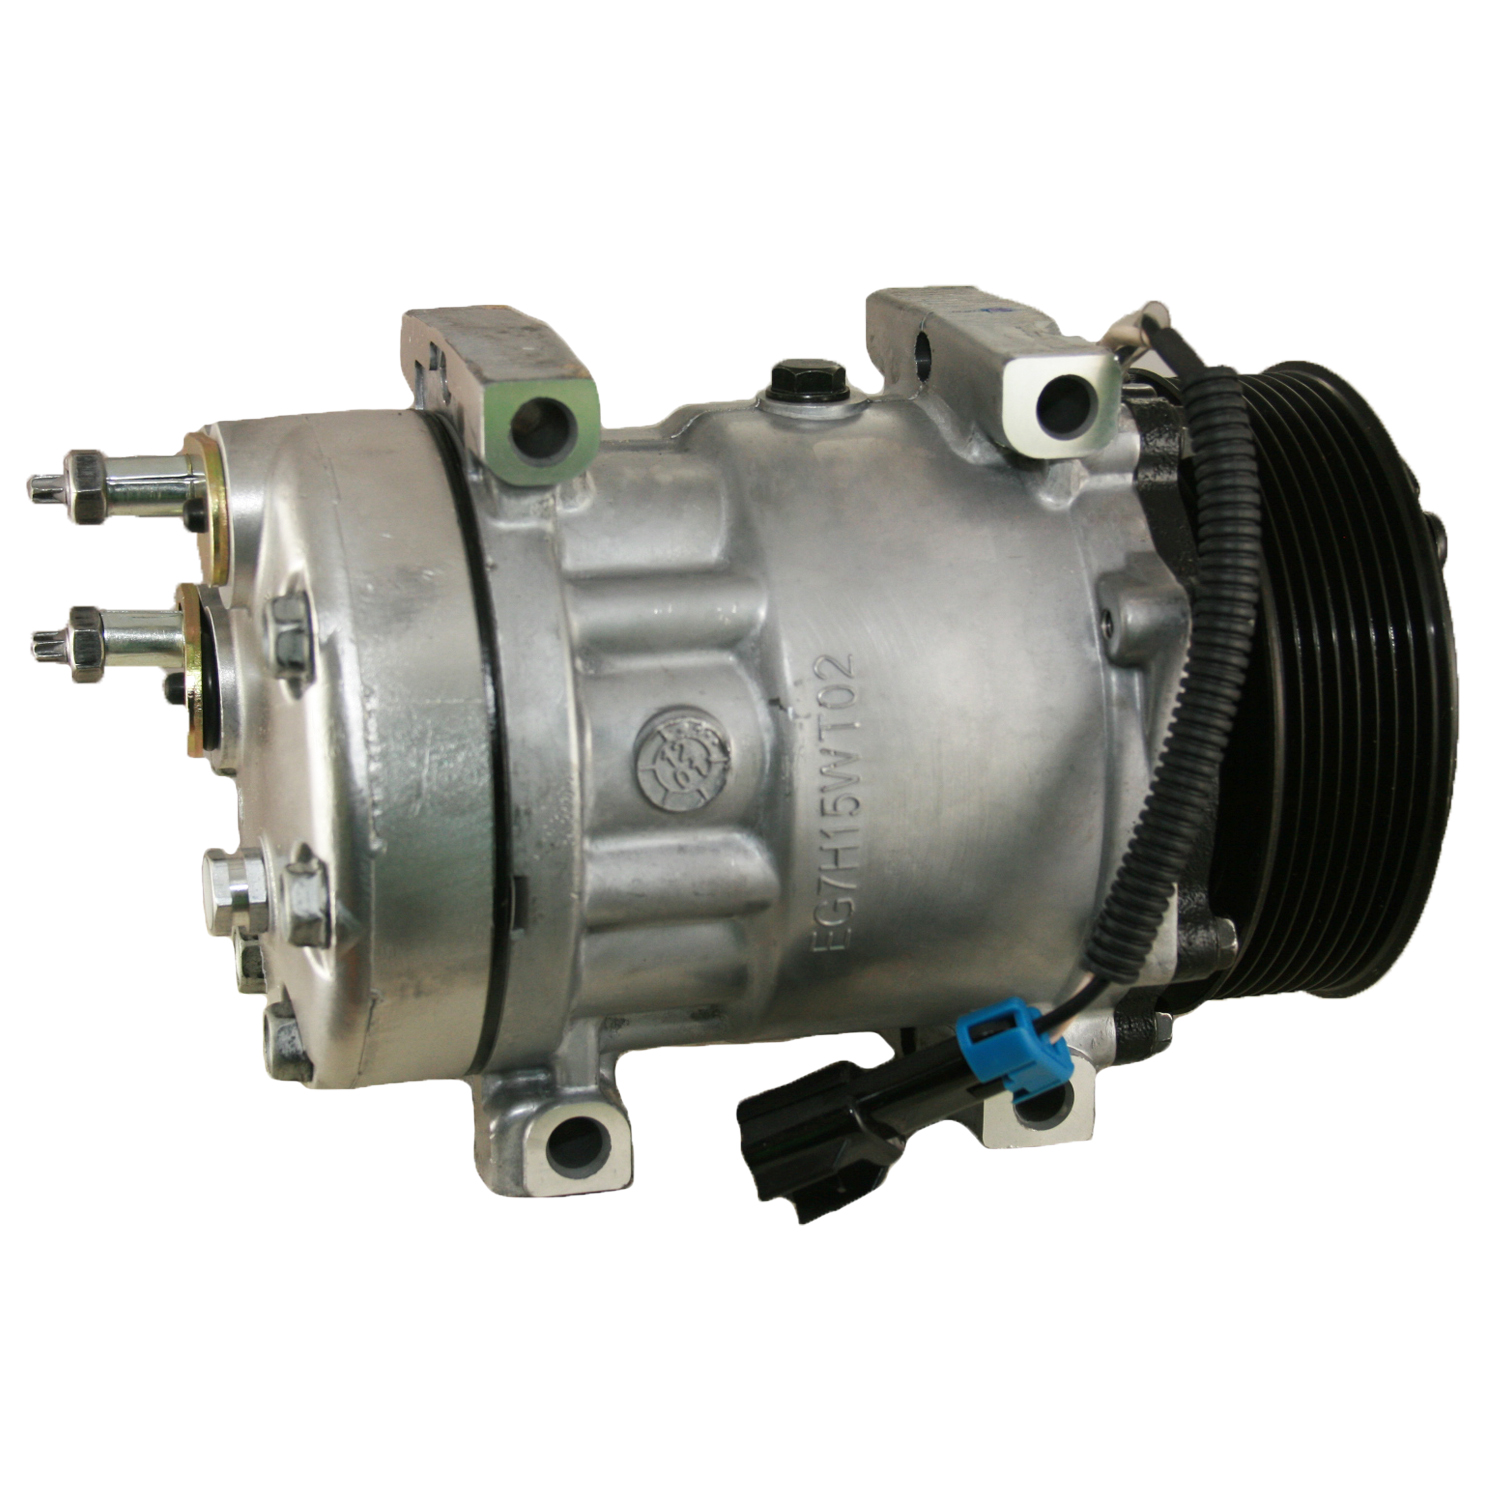 TCW Compressor 40598.801NEW New Product Image field_60b6a13a6e67c